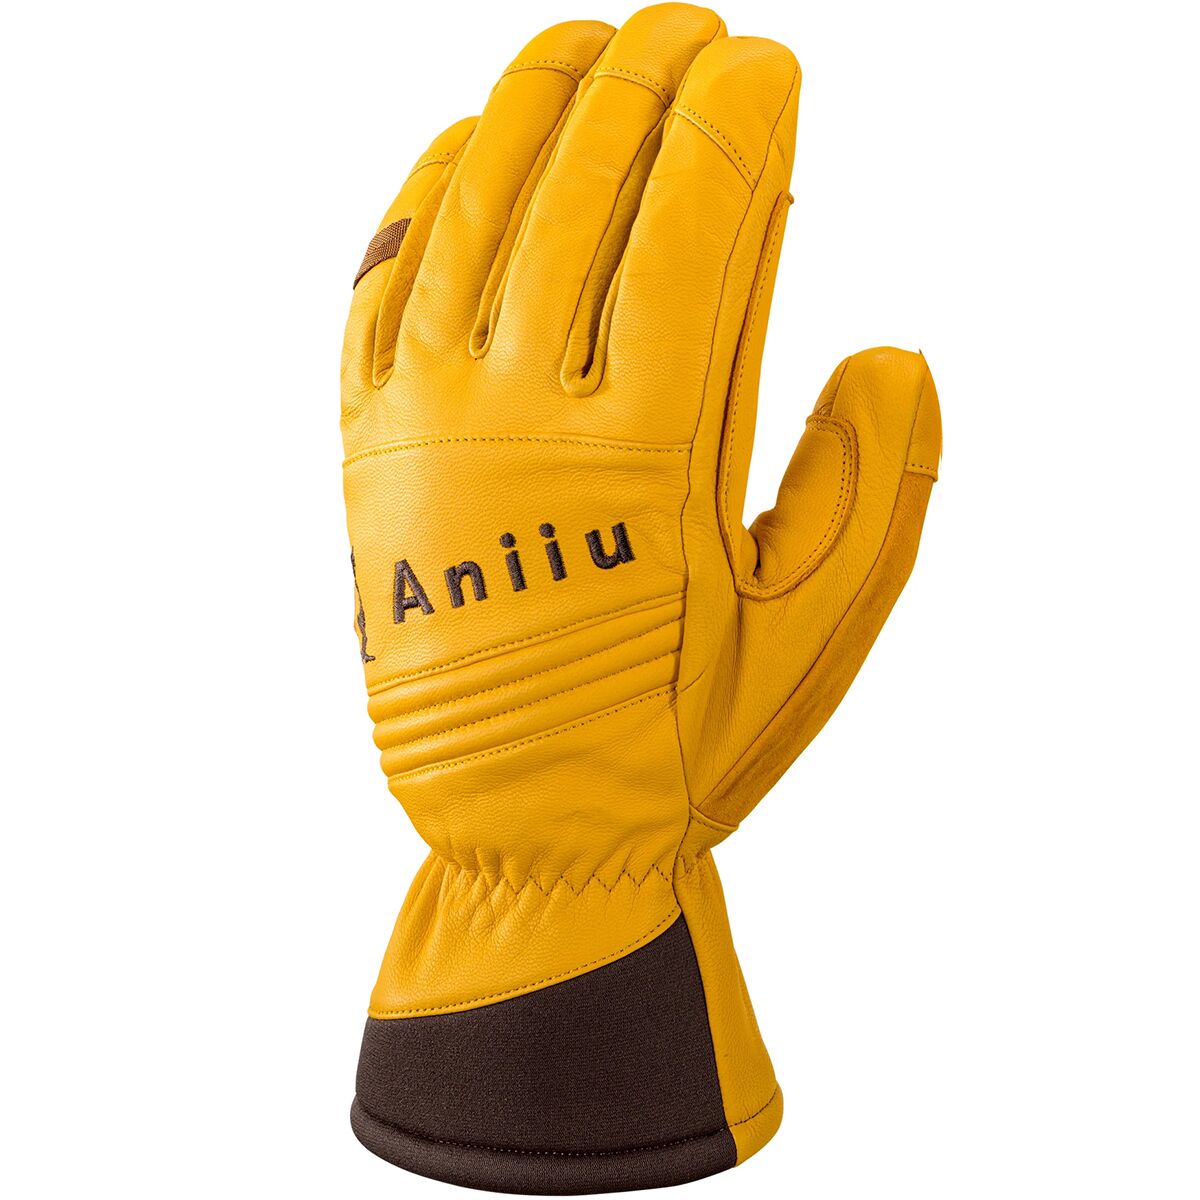 Aniiu Tyree Short Pro Glove - Men's